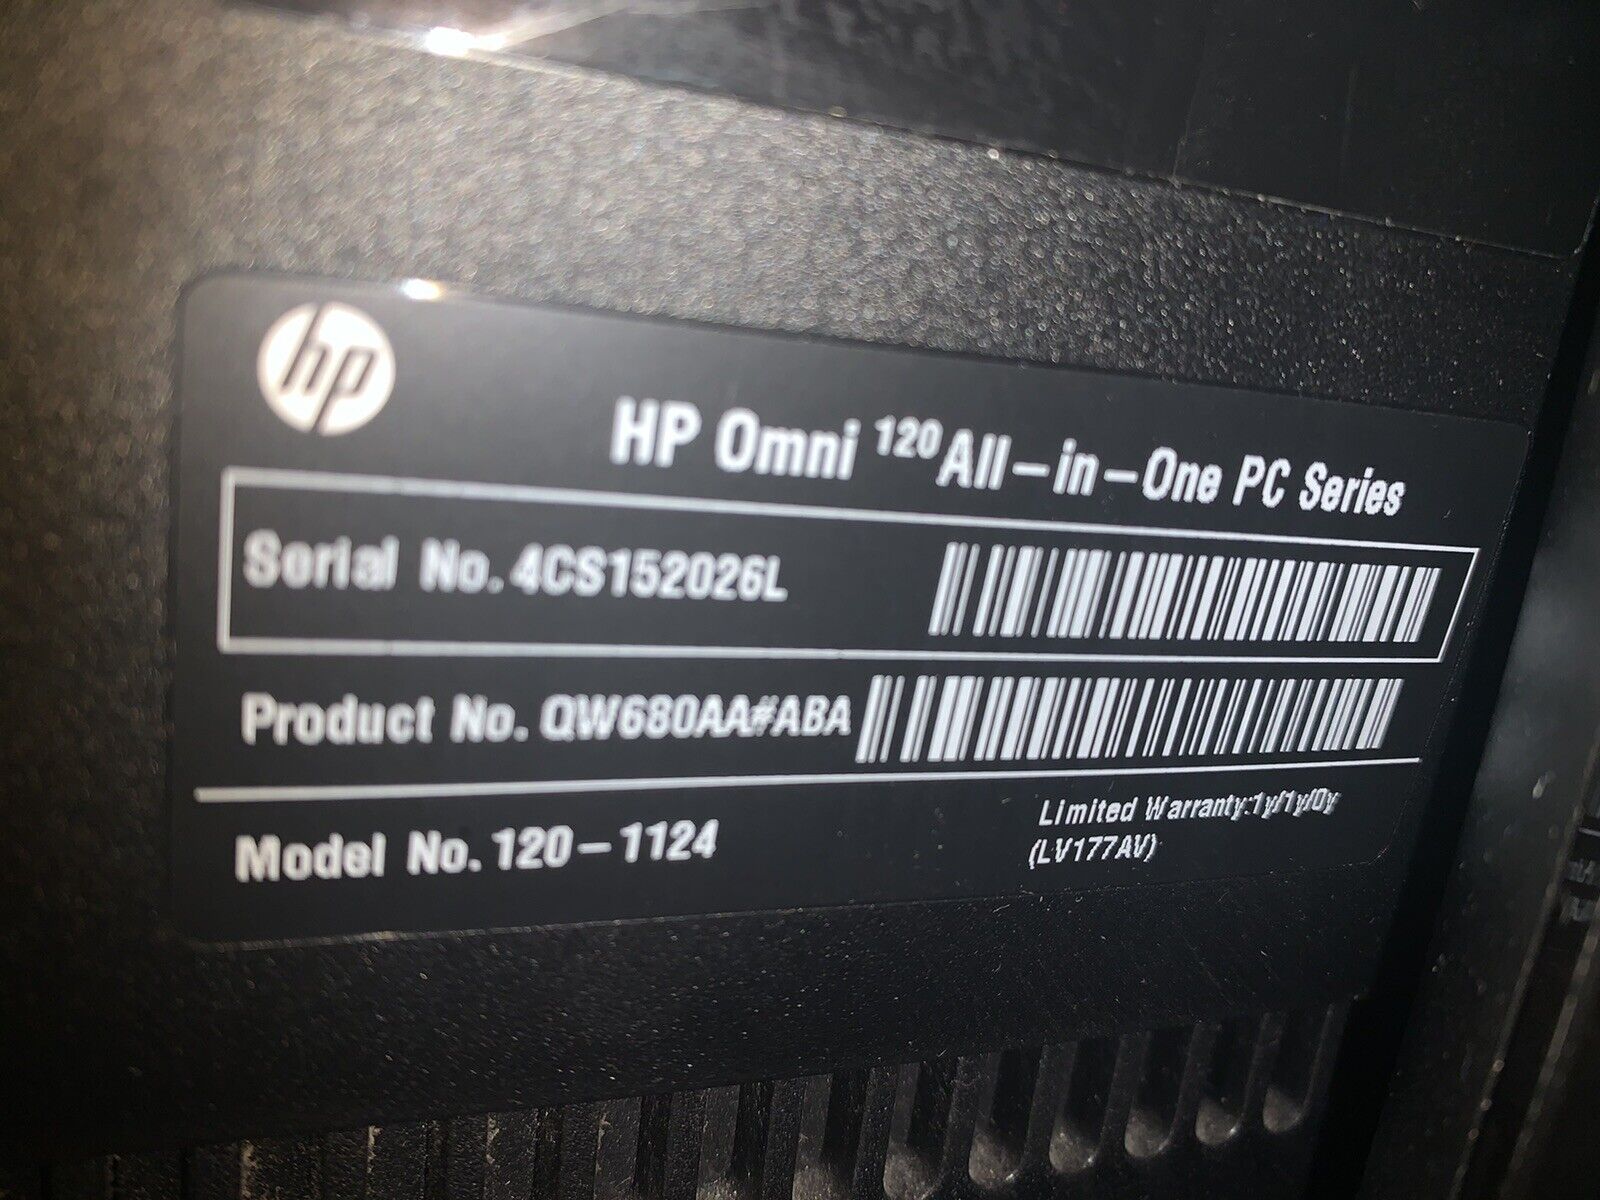 Hp Omni 120 All In One Pc Series Model 120-1034 Windows 10 ,1 Tb Hd, 6Gb Ram